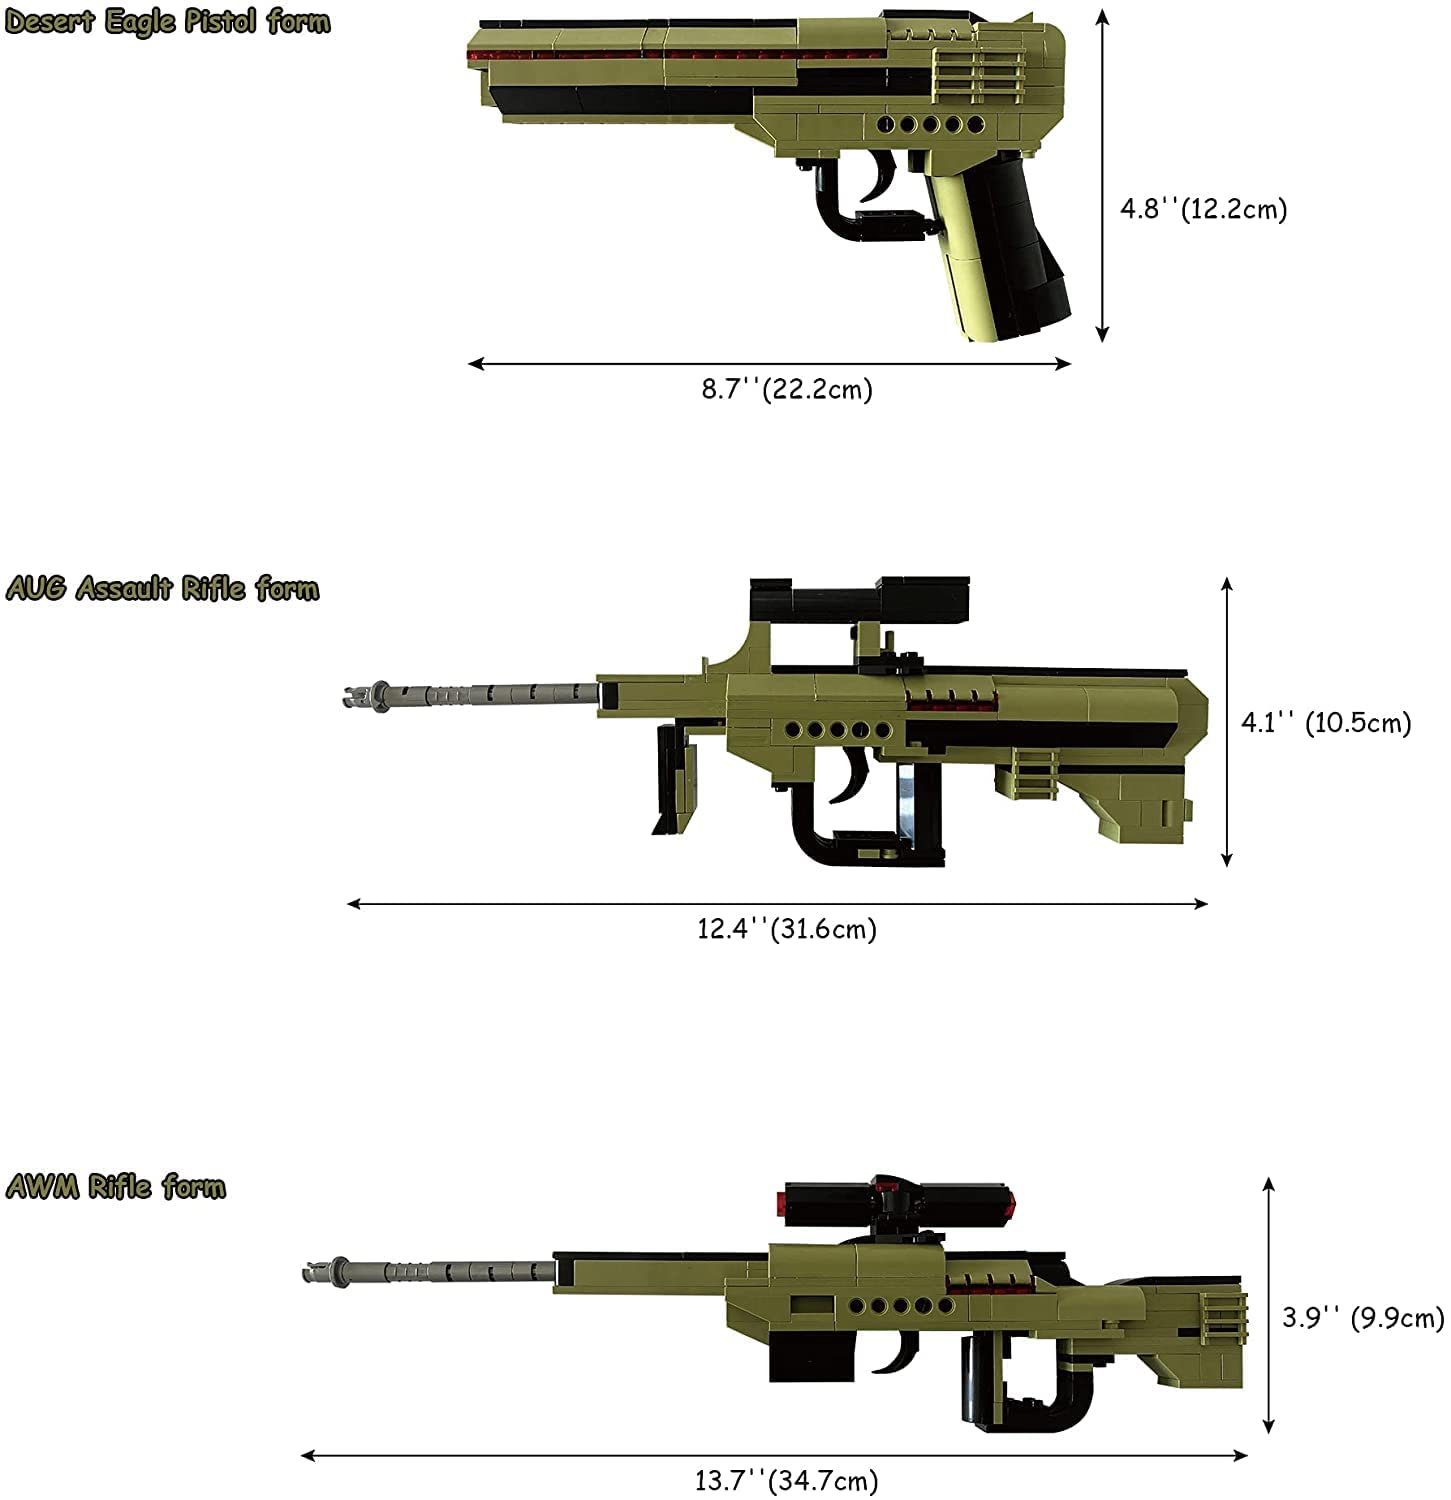 QMAN Building Block Gun, 3-in-1 Simulation Blaster Building Blocks with Bullets Military Weapon Building Set Model for Kids,202 PCS